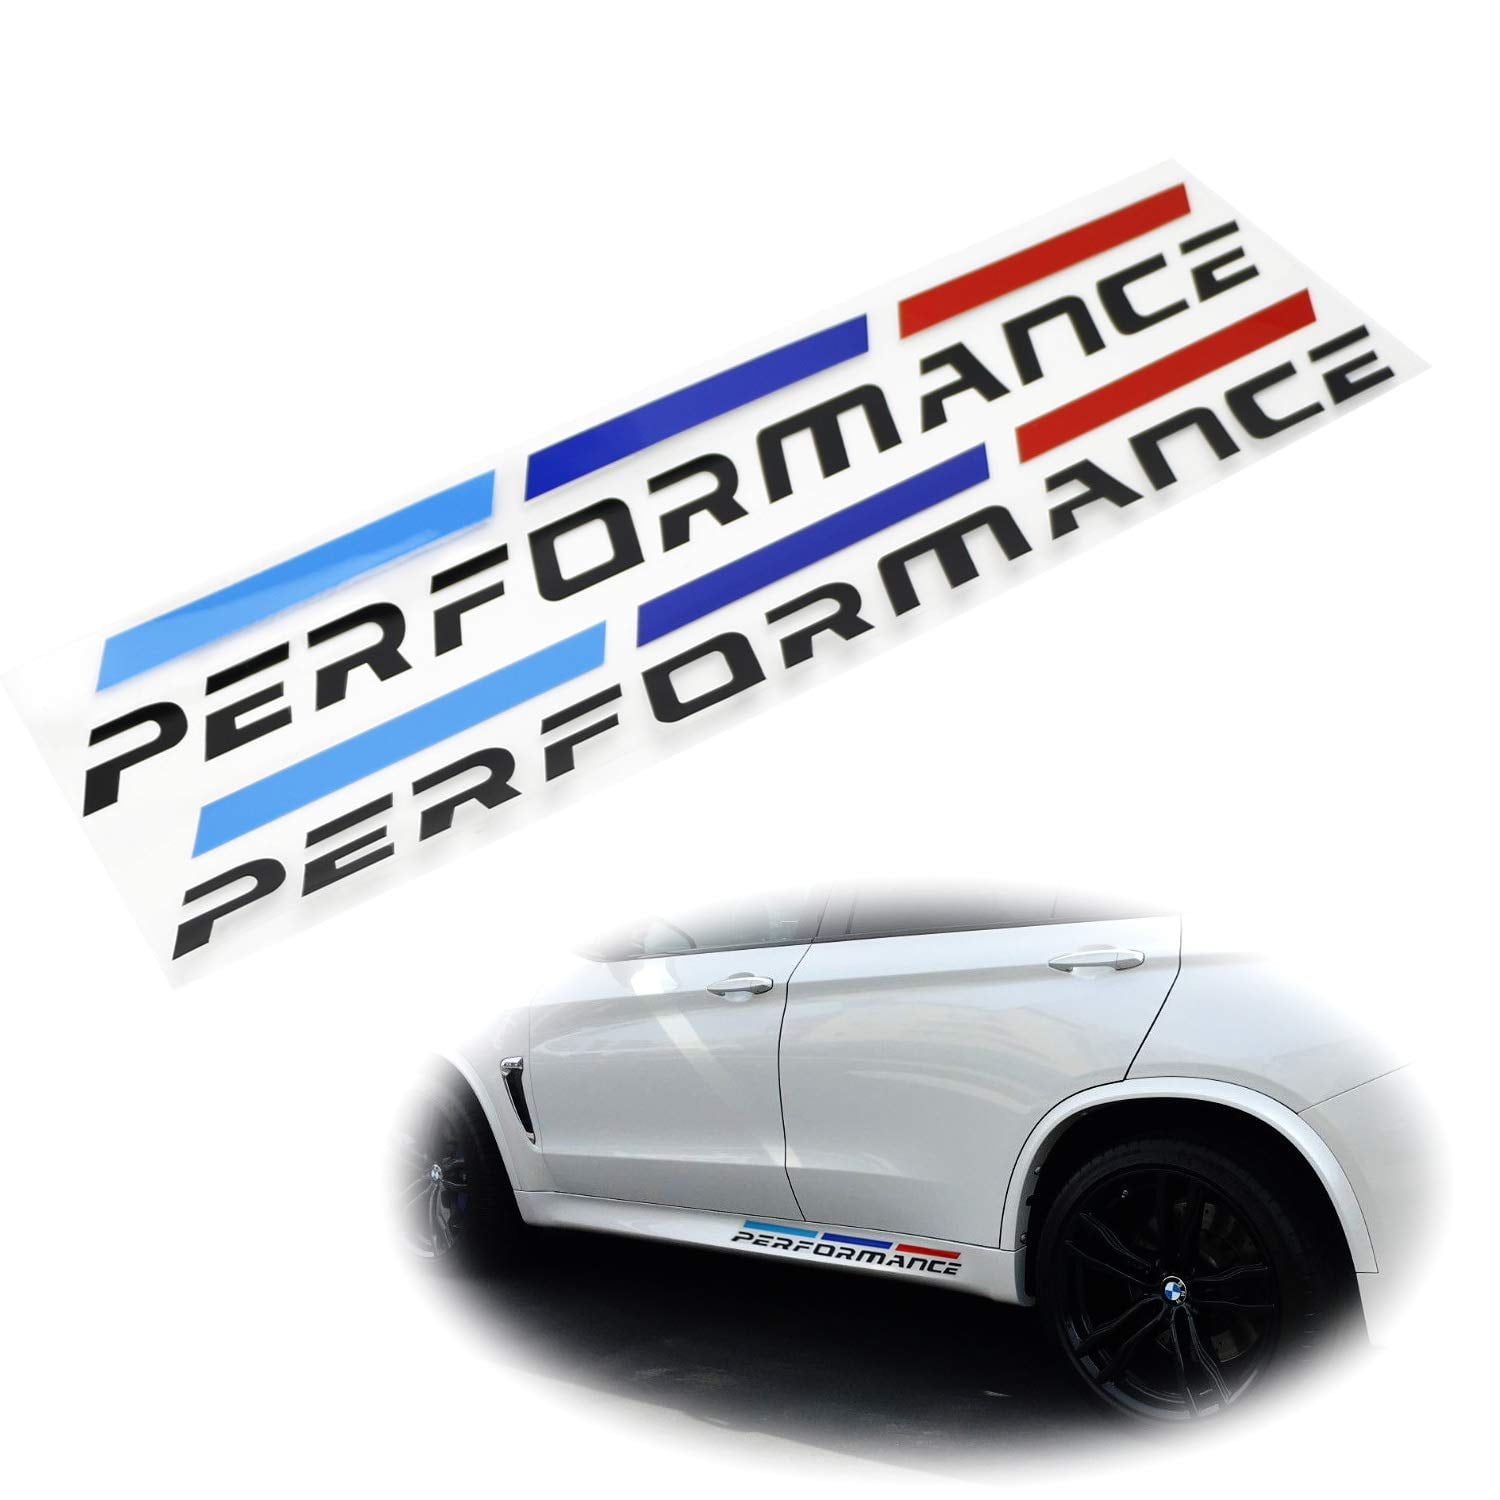 M Performance BMW Logo Vinyl Sticker Decal for PCs walls Window laptops cars